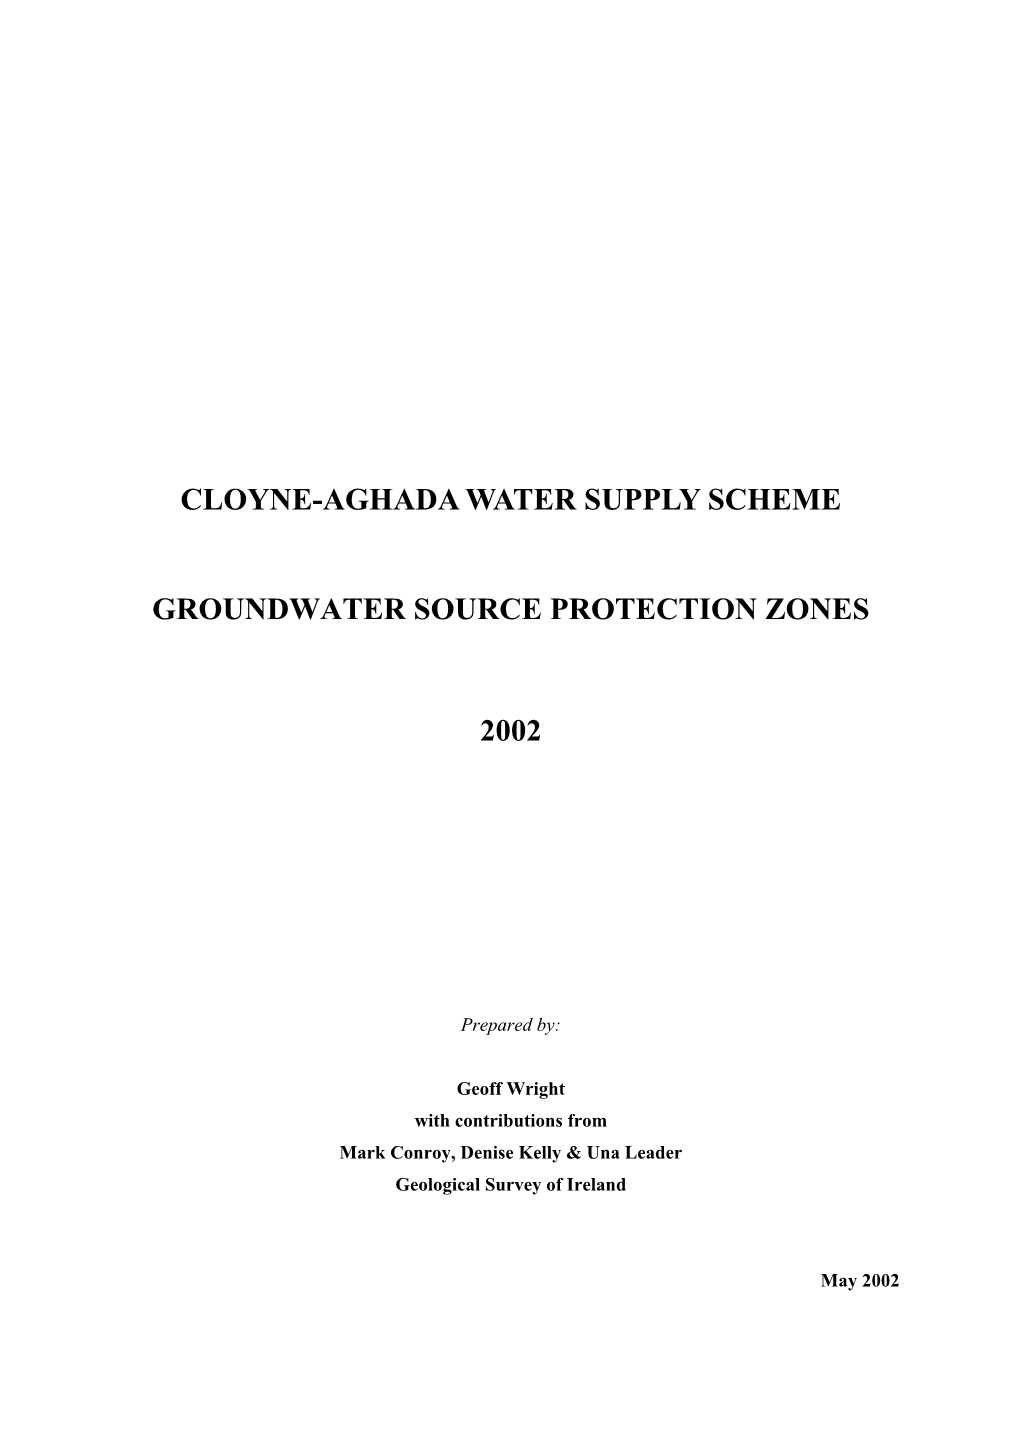 Cloyne-Aghada Water Supply Scheme Groundwater